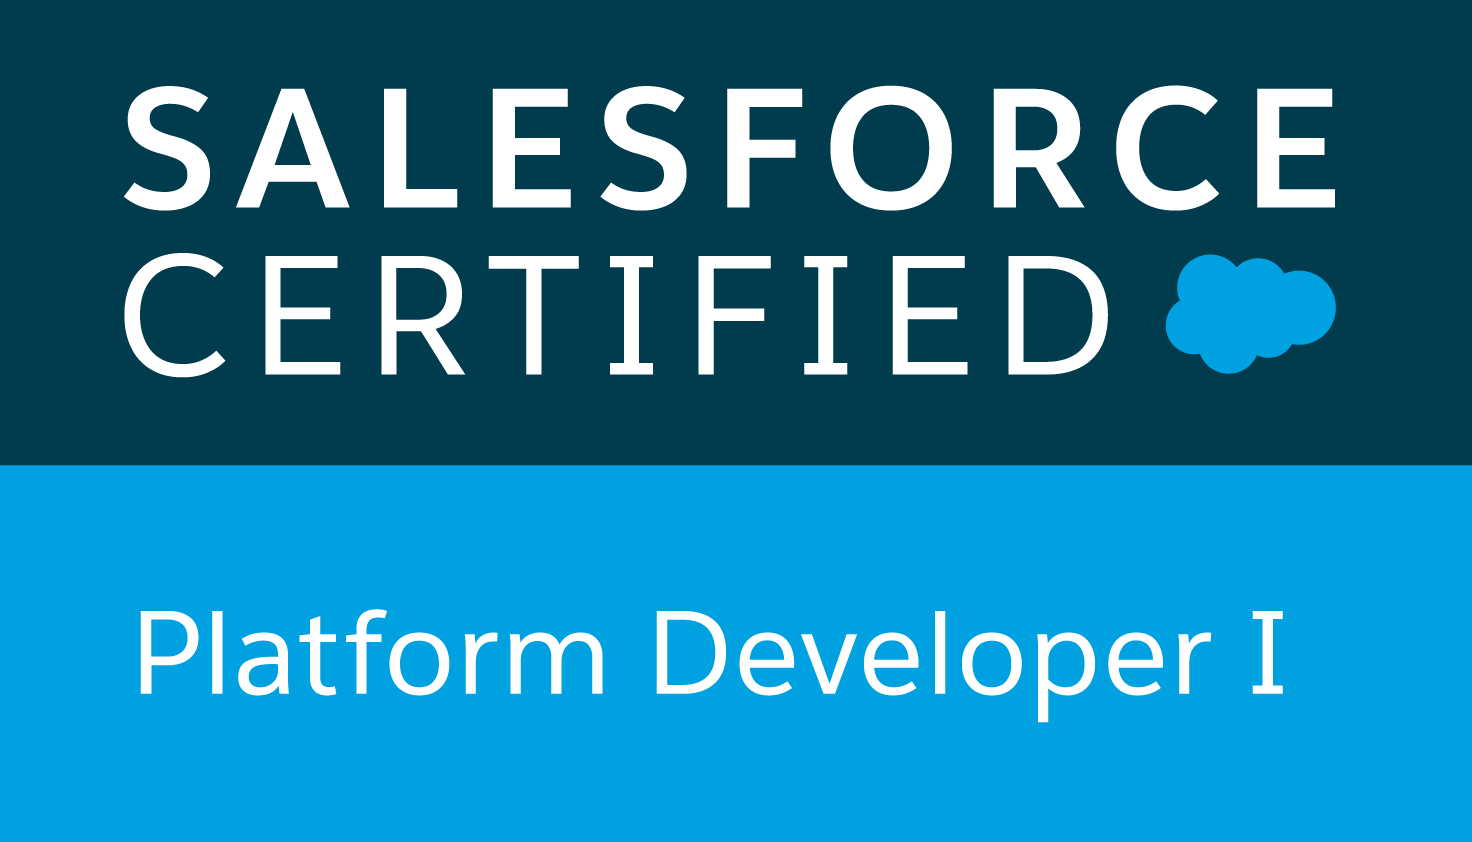 Salesforce Platform Developer 1 Certificate